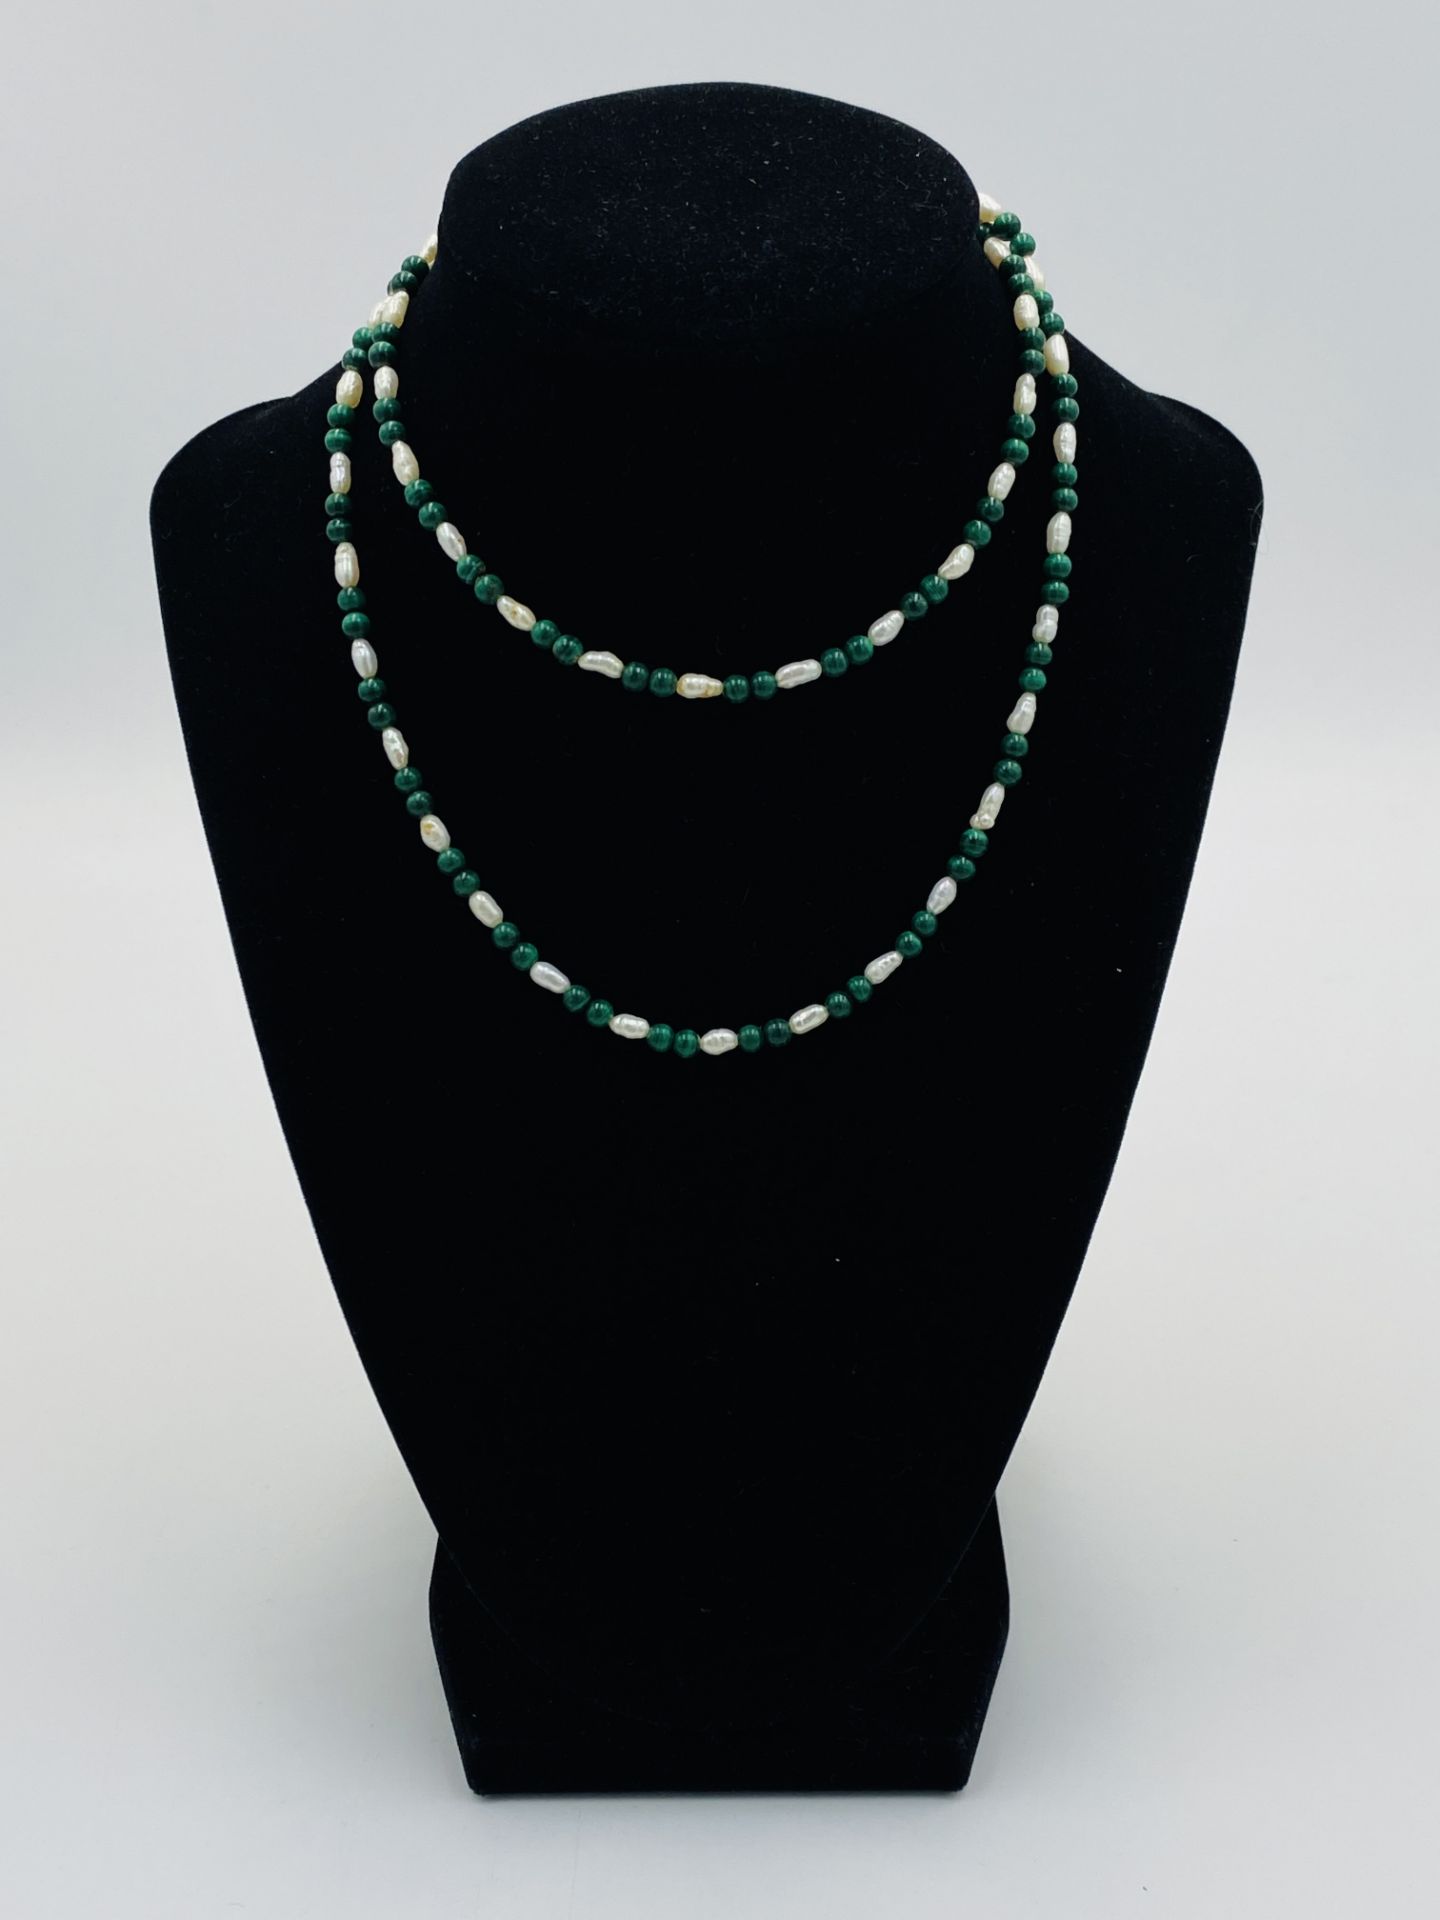 Ten semi precious stone necklaces - Image 7 of 11